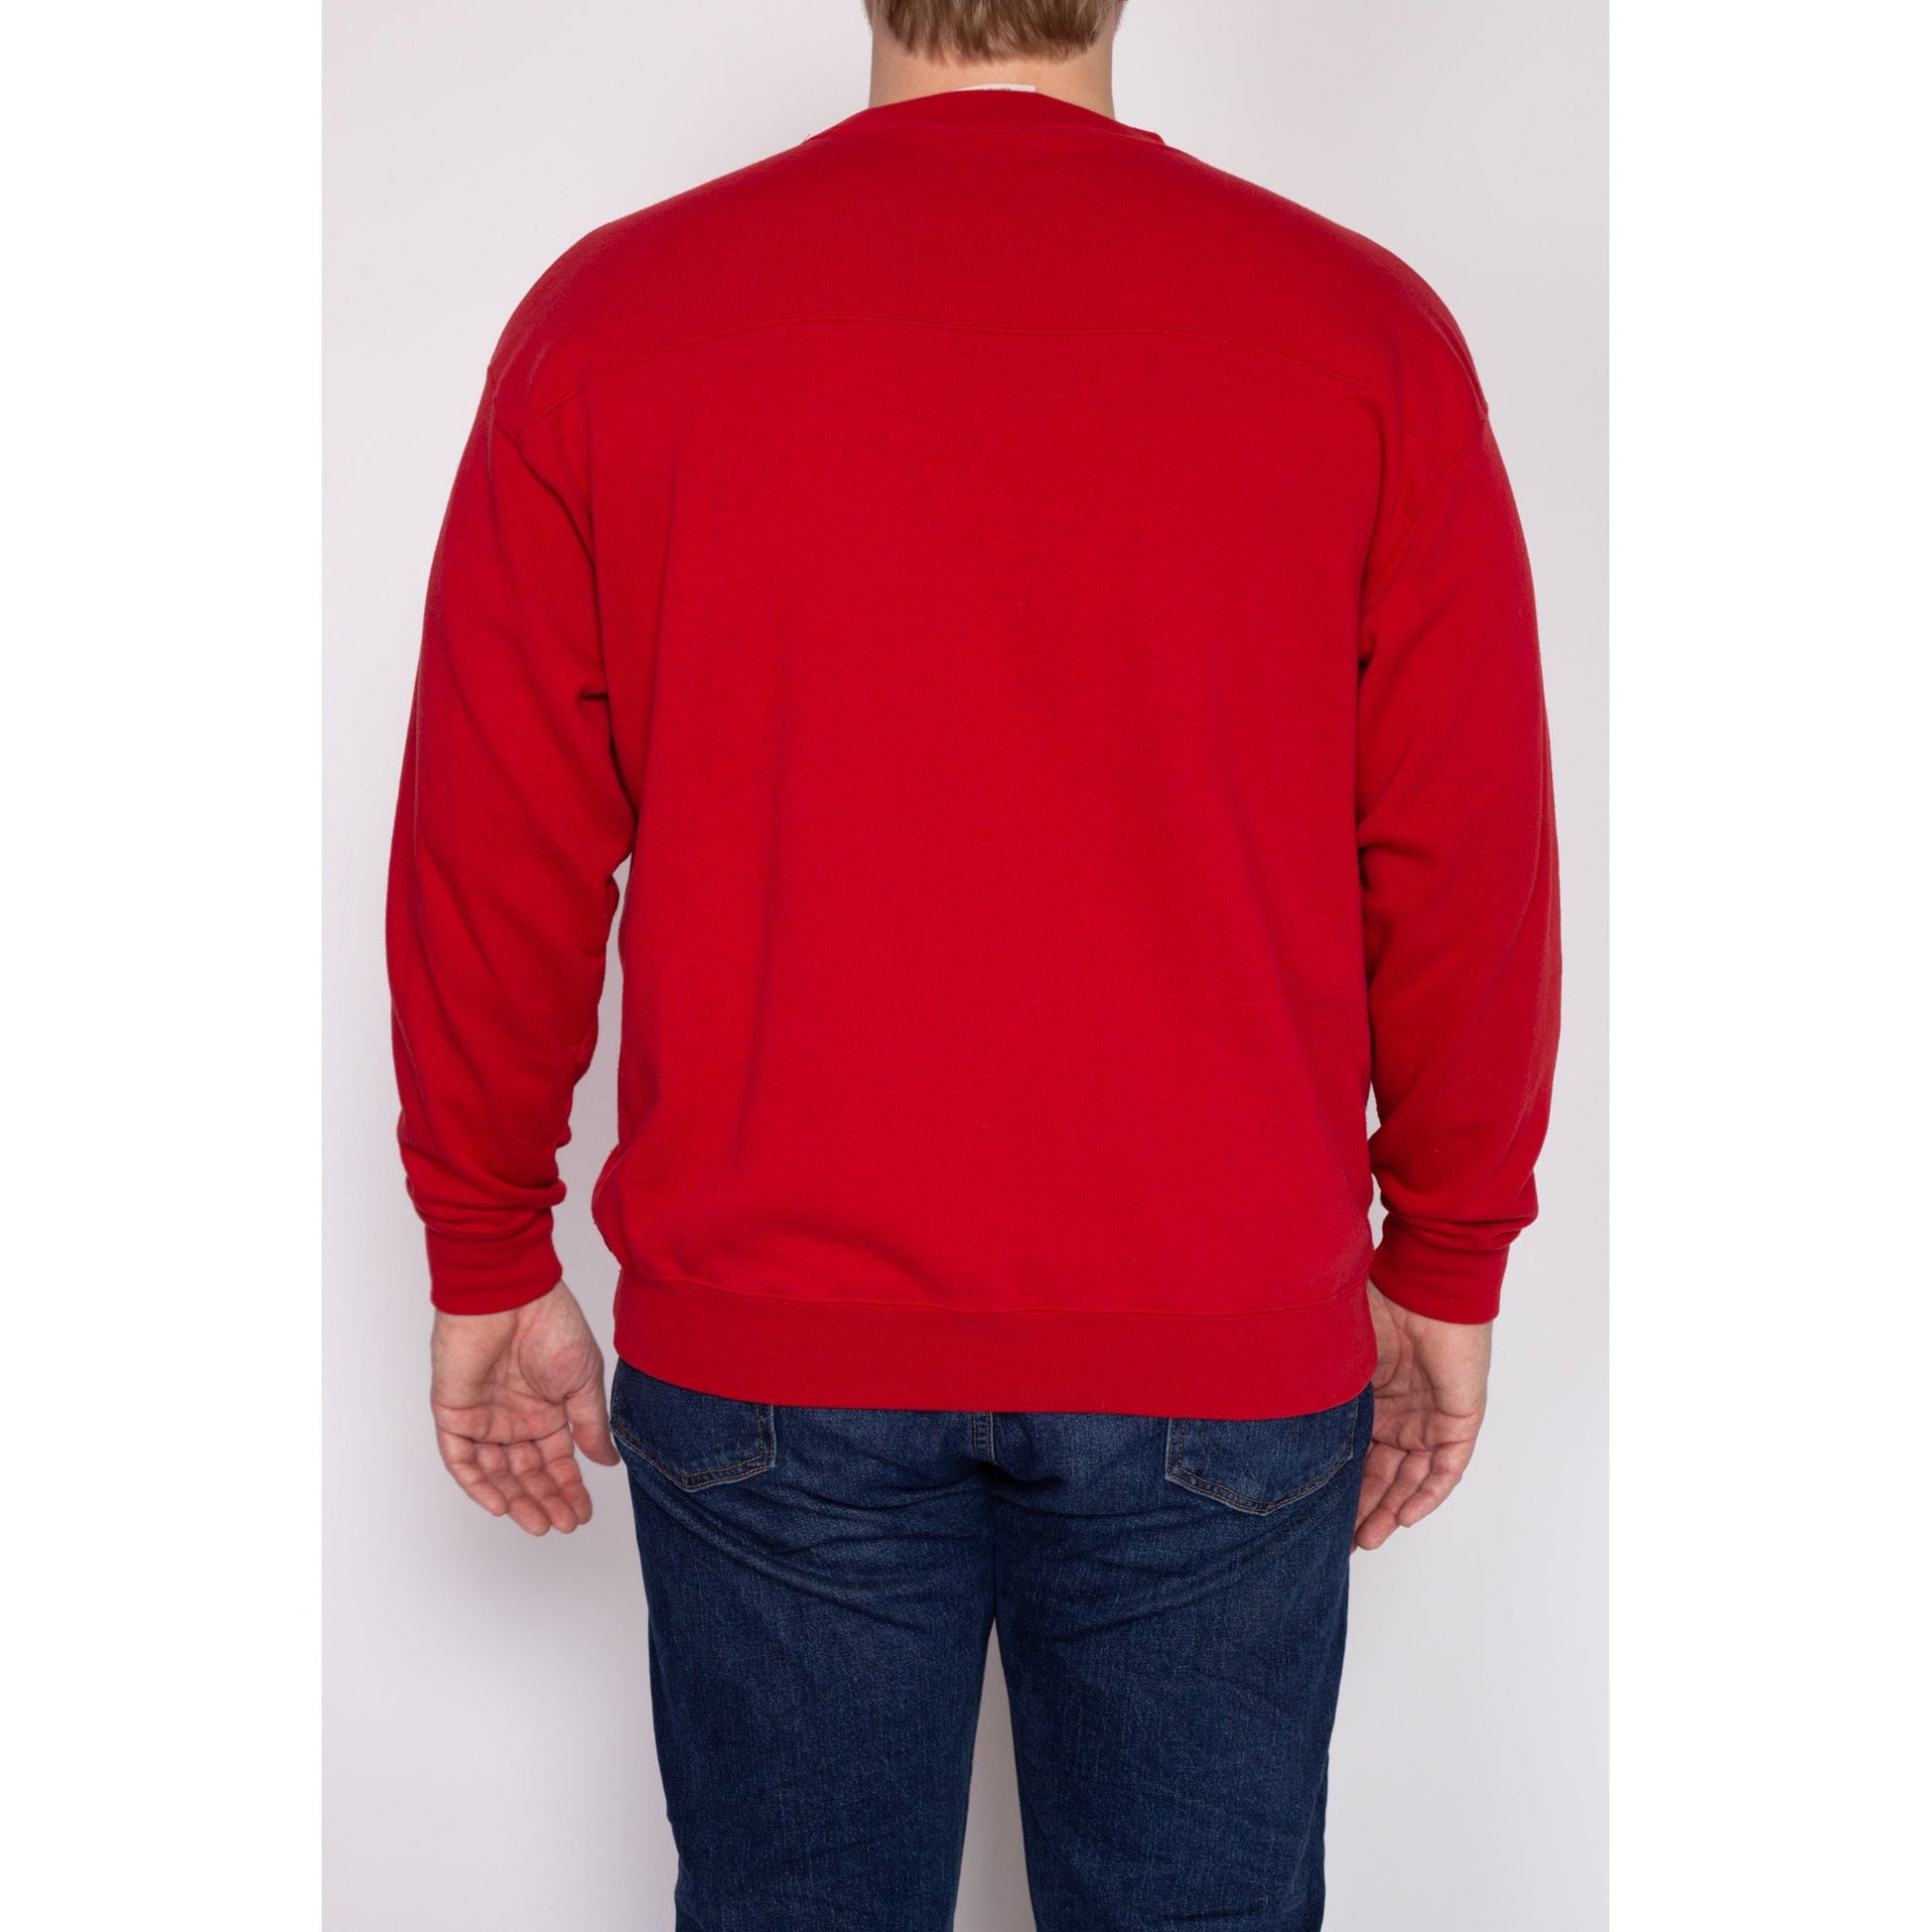 XL 90s Tampa Bay Buccaneers Sweatshirt | Vintage NFL Football Lee Red Graphic Crewneck Pullover